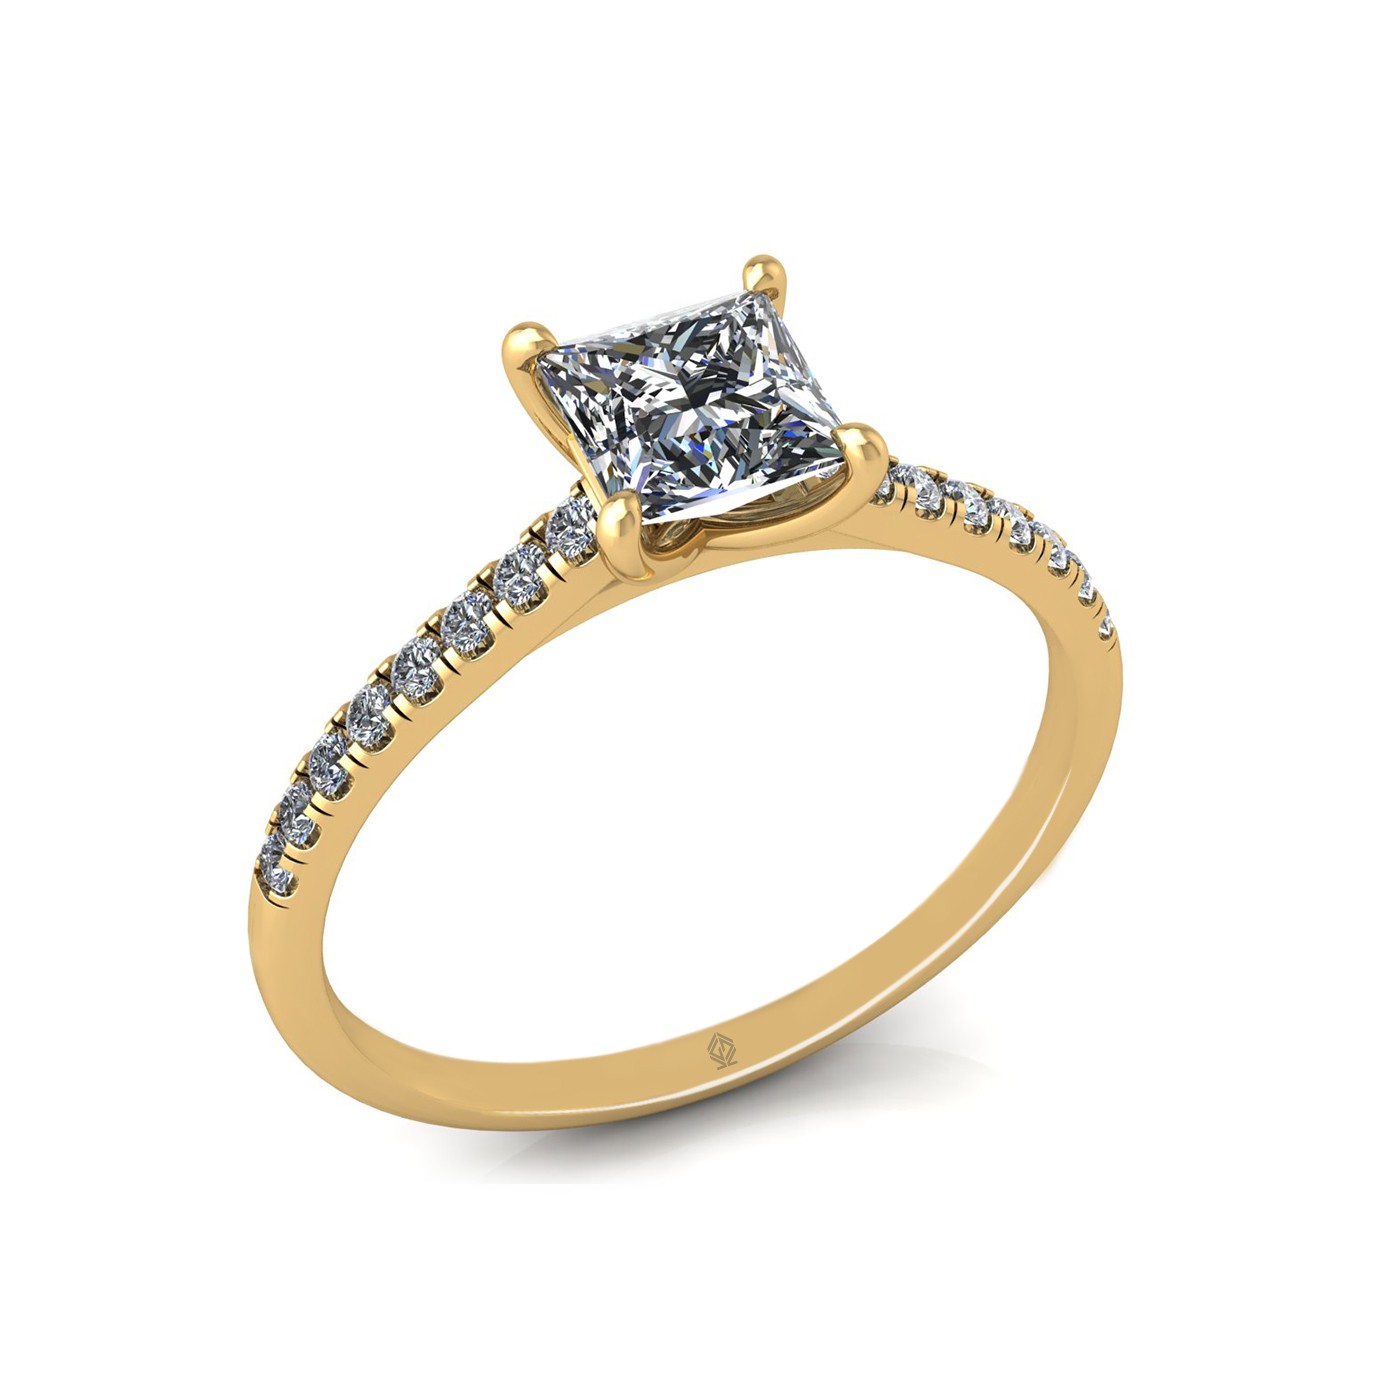 18k yellow gold  0,80 ct 4 prongs princess cut diamond engagement ring with whisper thin pavÉ set band